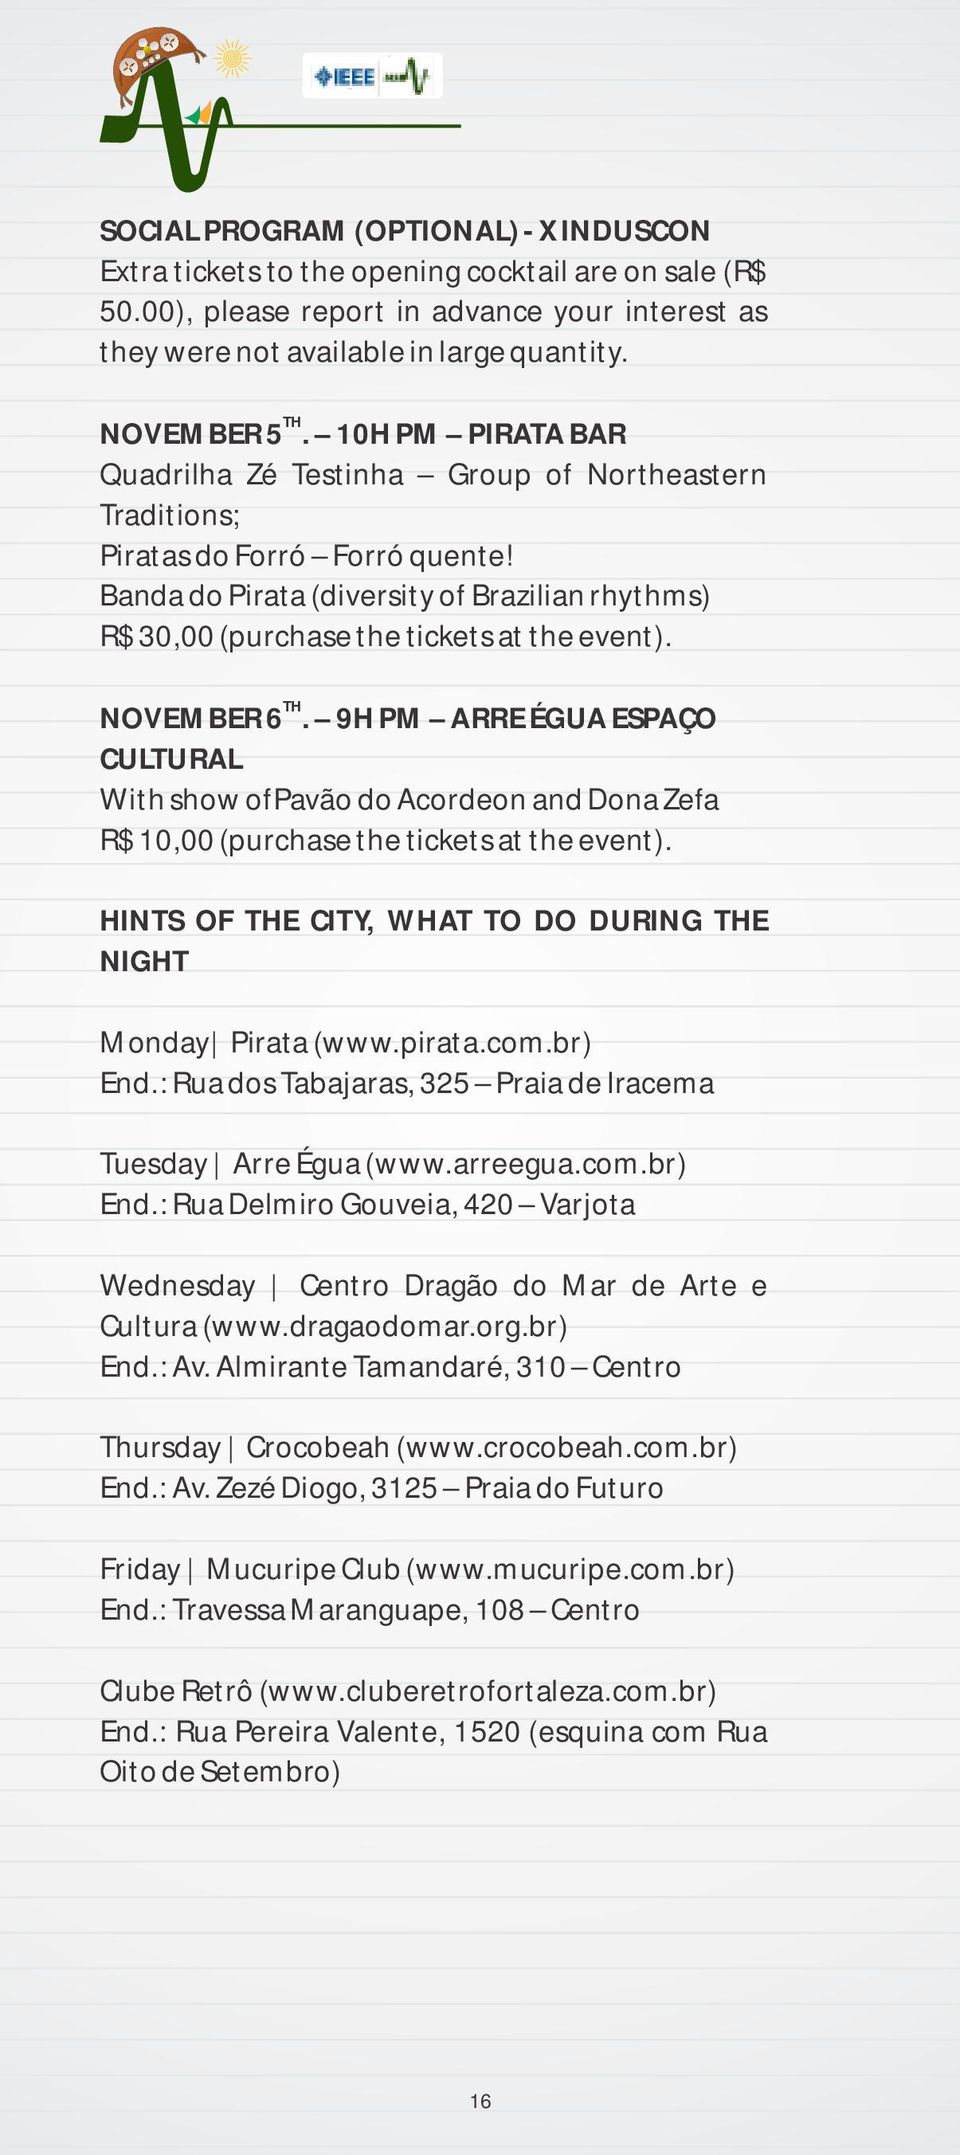 TH NOVEMBER 6. 9H PM ARRE ÉGUA ESPAÇO CULTURAL With show ofpavão do Acordeon and Dona Zefa R$ 10,00 (purchase the tickets at the event).